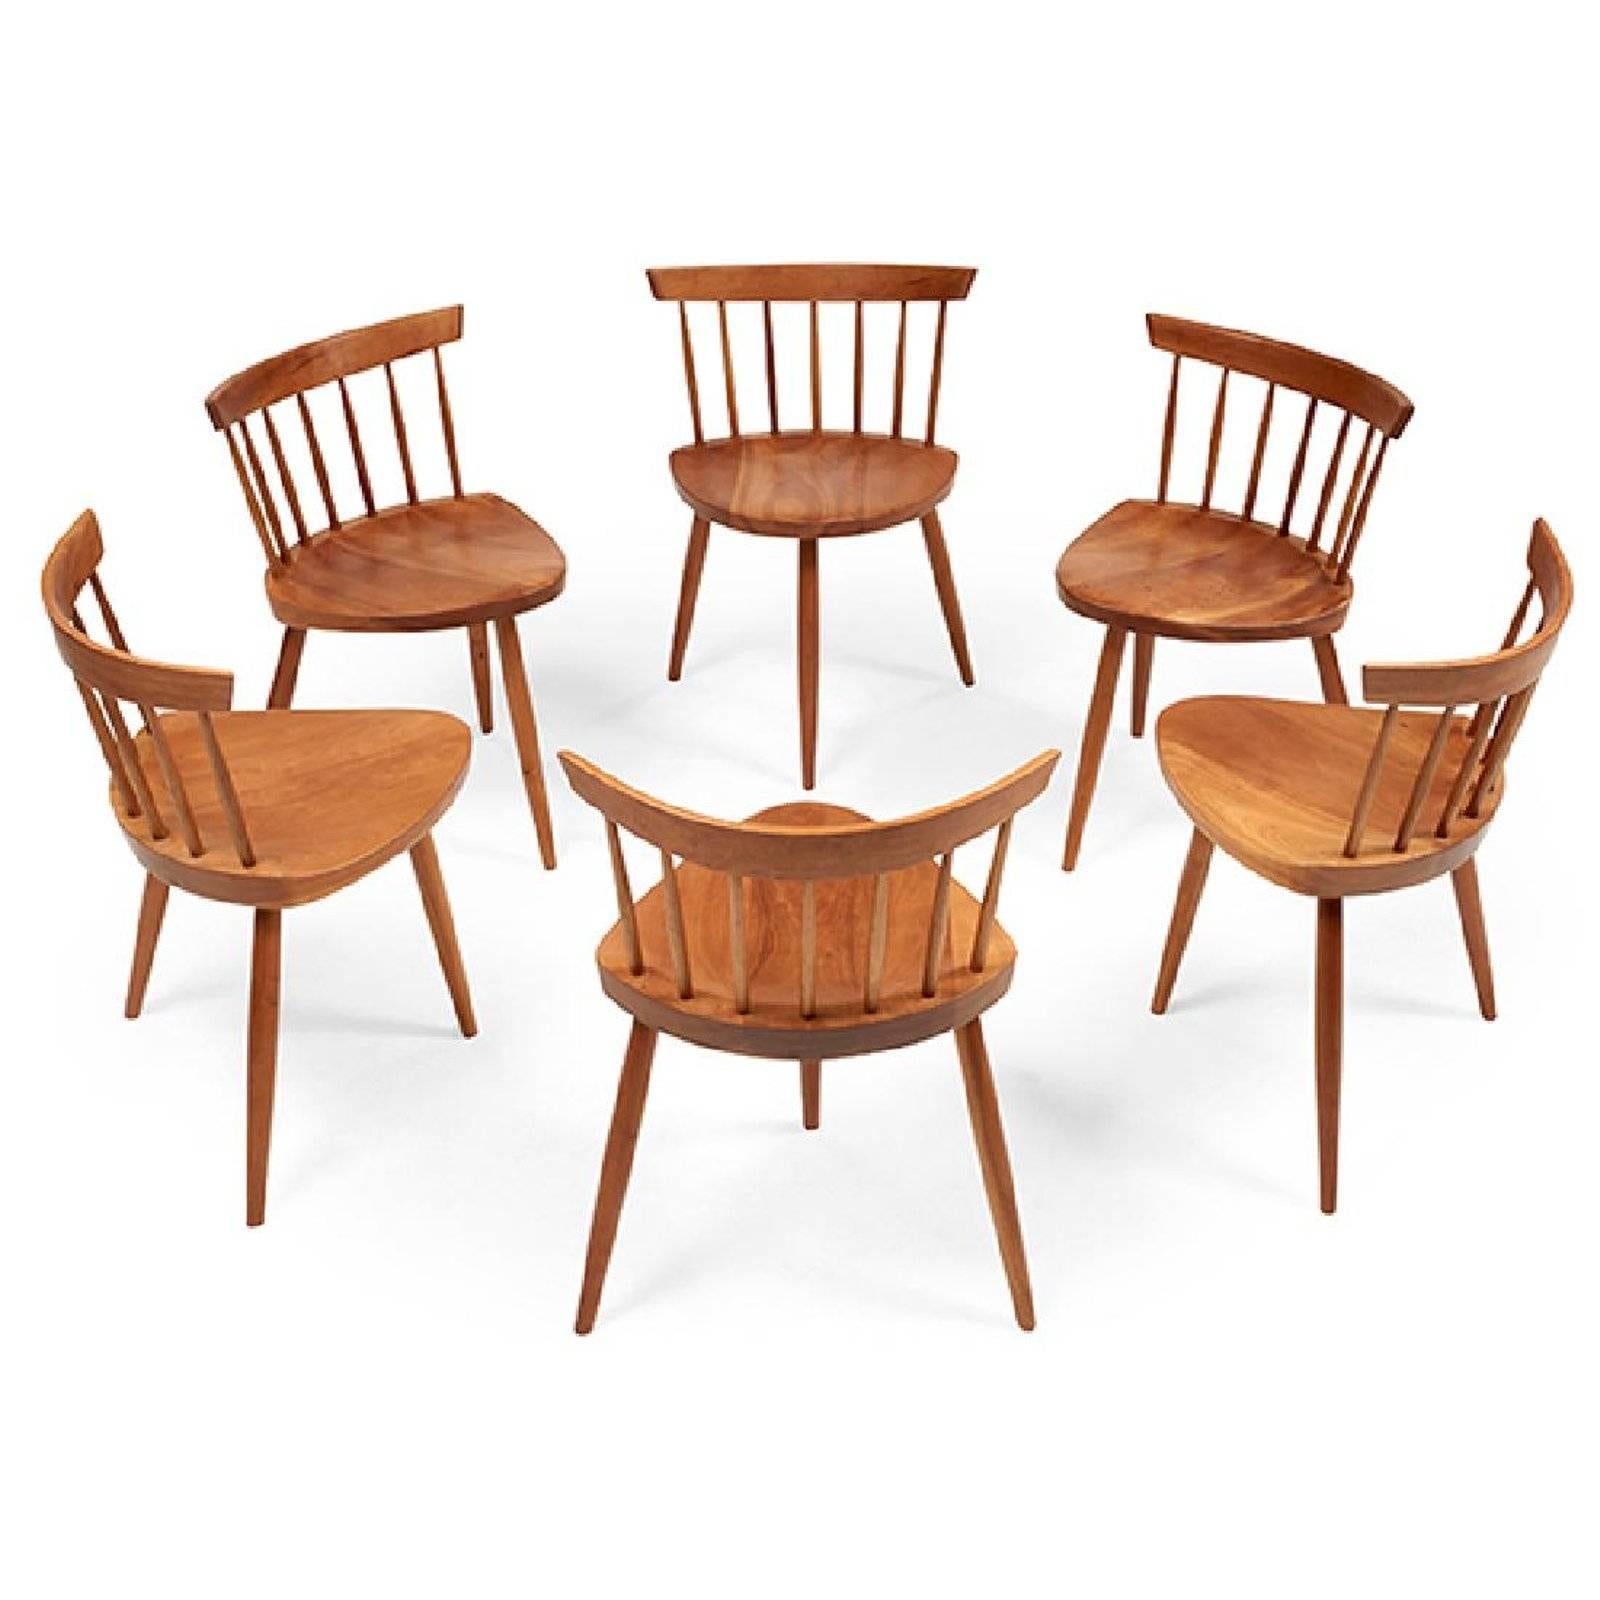 Early Set of Six Mira Chairs by George Nakashima